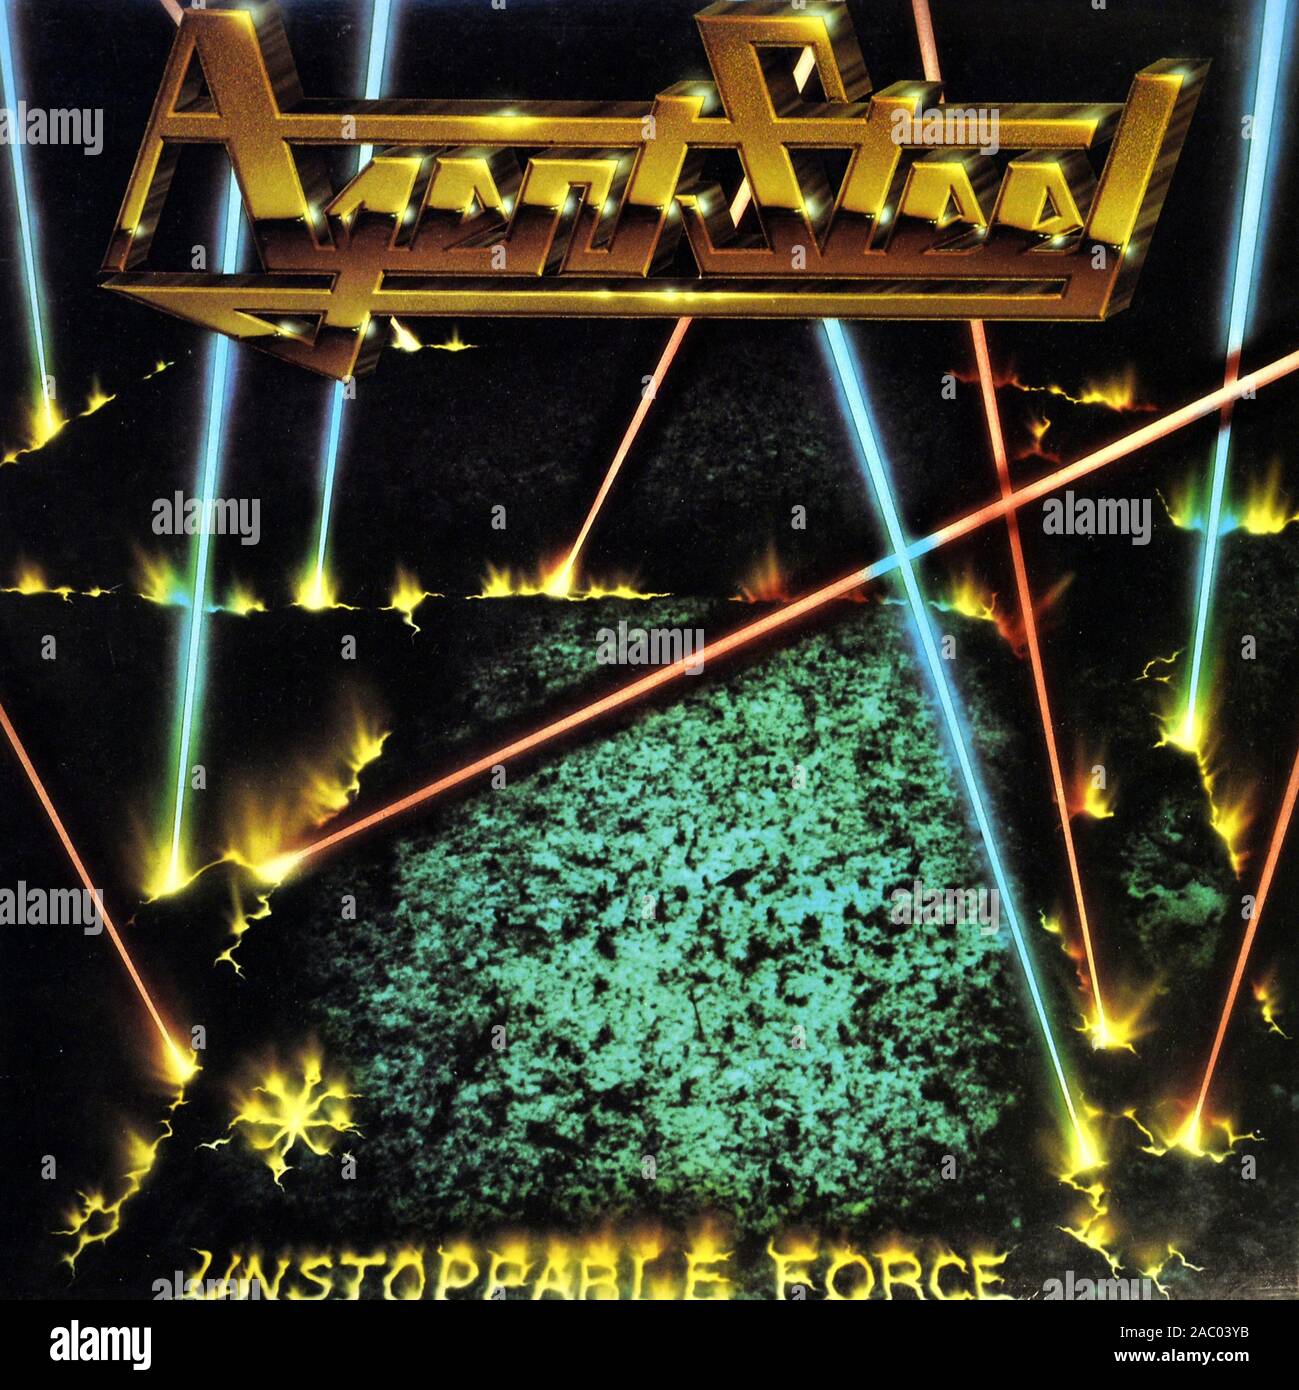 Agent Steel Unstoppable Force - Vintage vinyl album cover Stock Photo